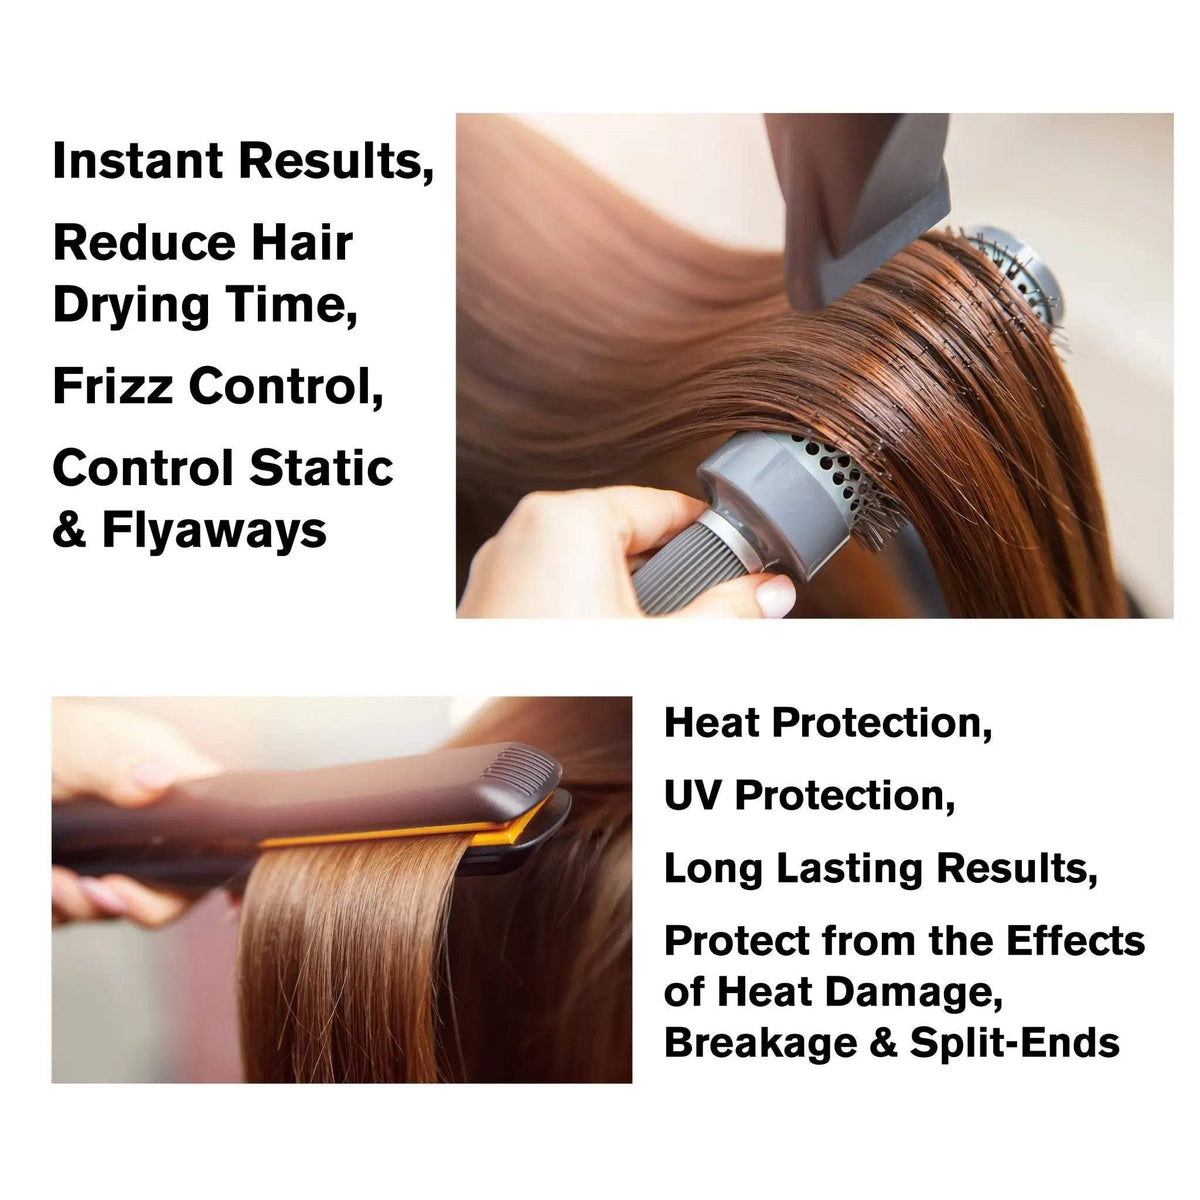 STRONGFORCE Intensive Leave-In Hair Oil with Argan Oil, Hyaluronic Acid, Ceramides, Peptides &amp; Vitamins - SNOBGIRLS.com